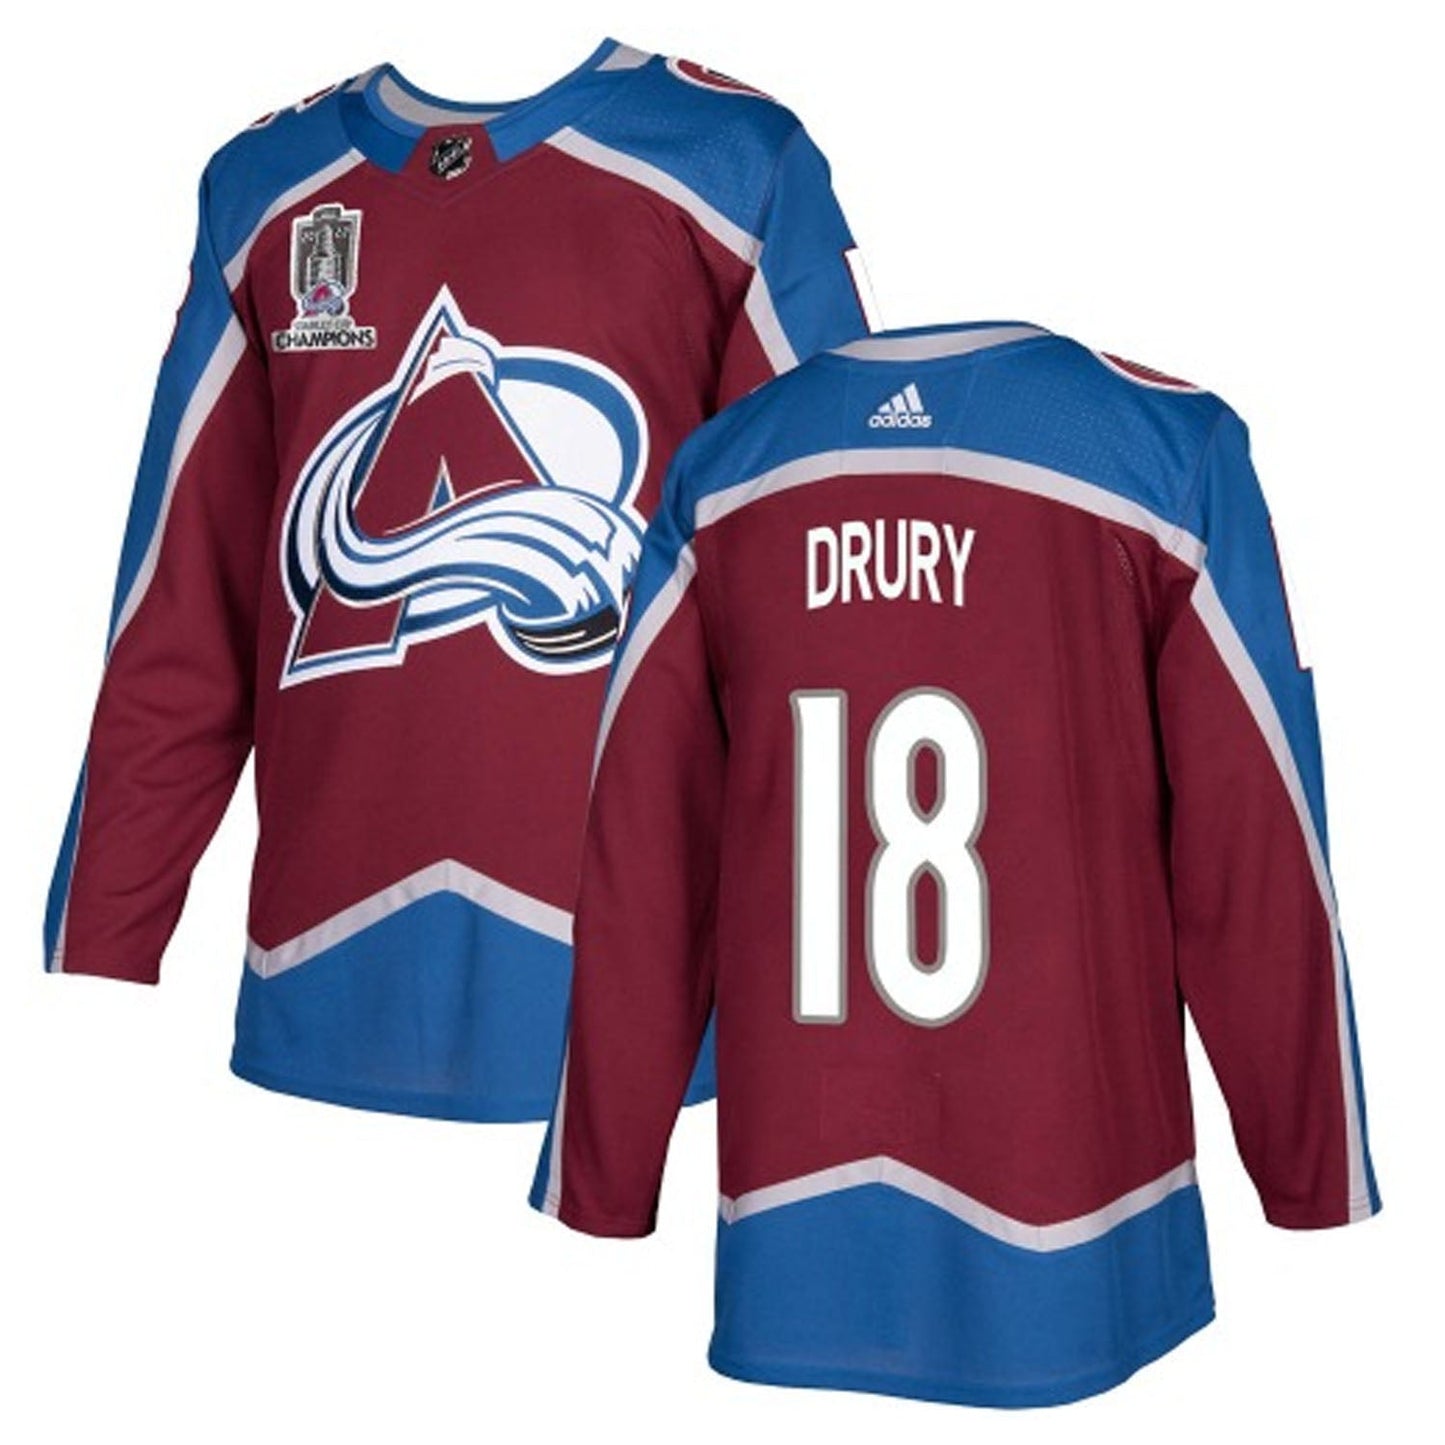 NHL Chris Drury Colorado Avalanche 18 Jersey